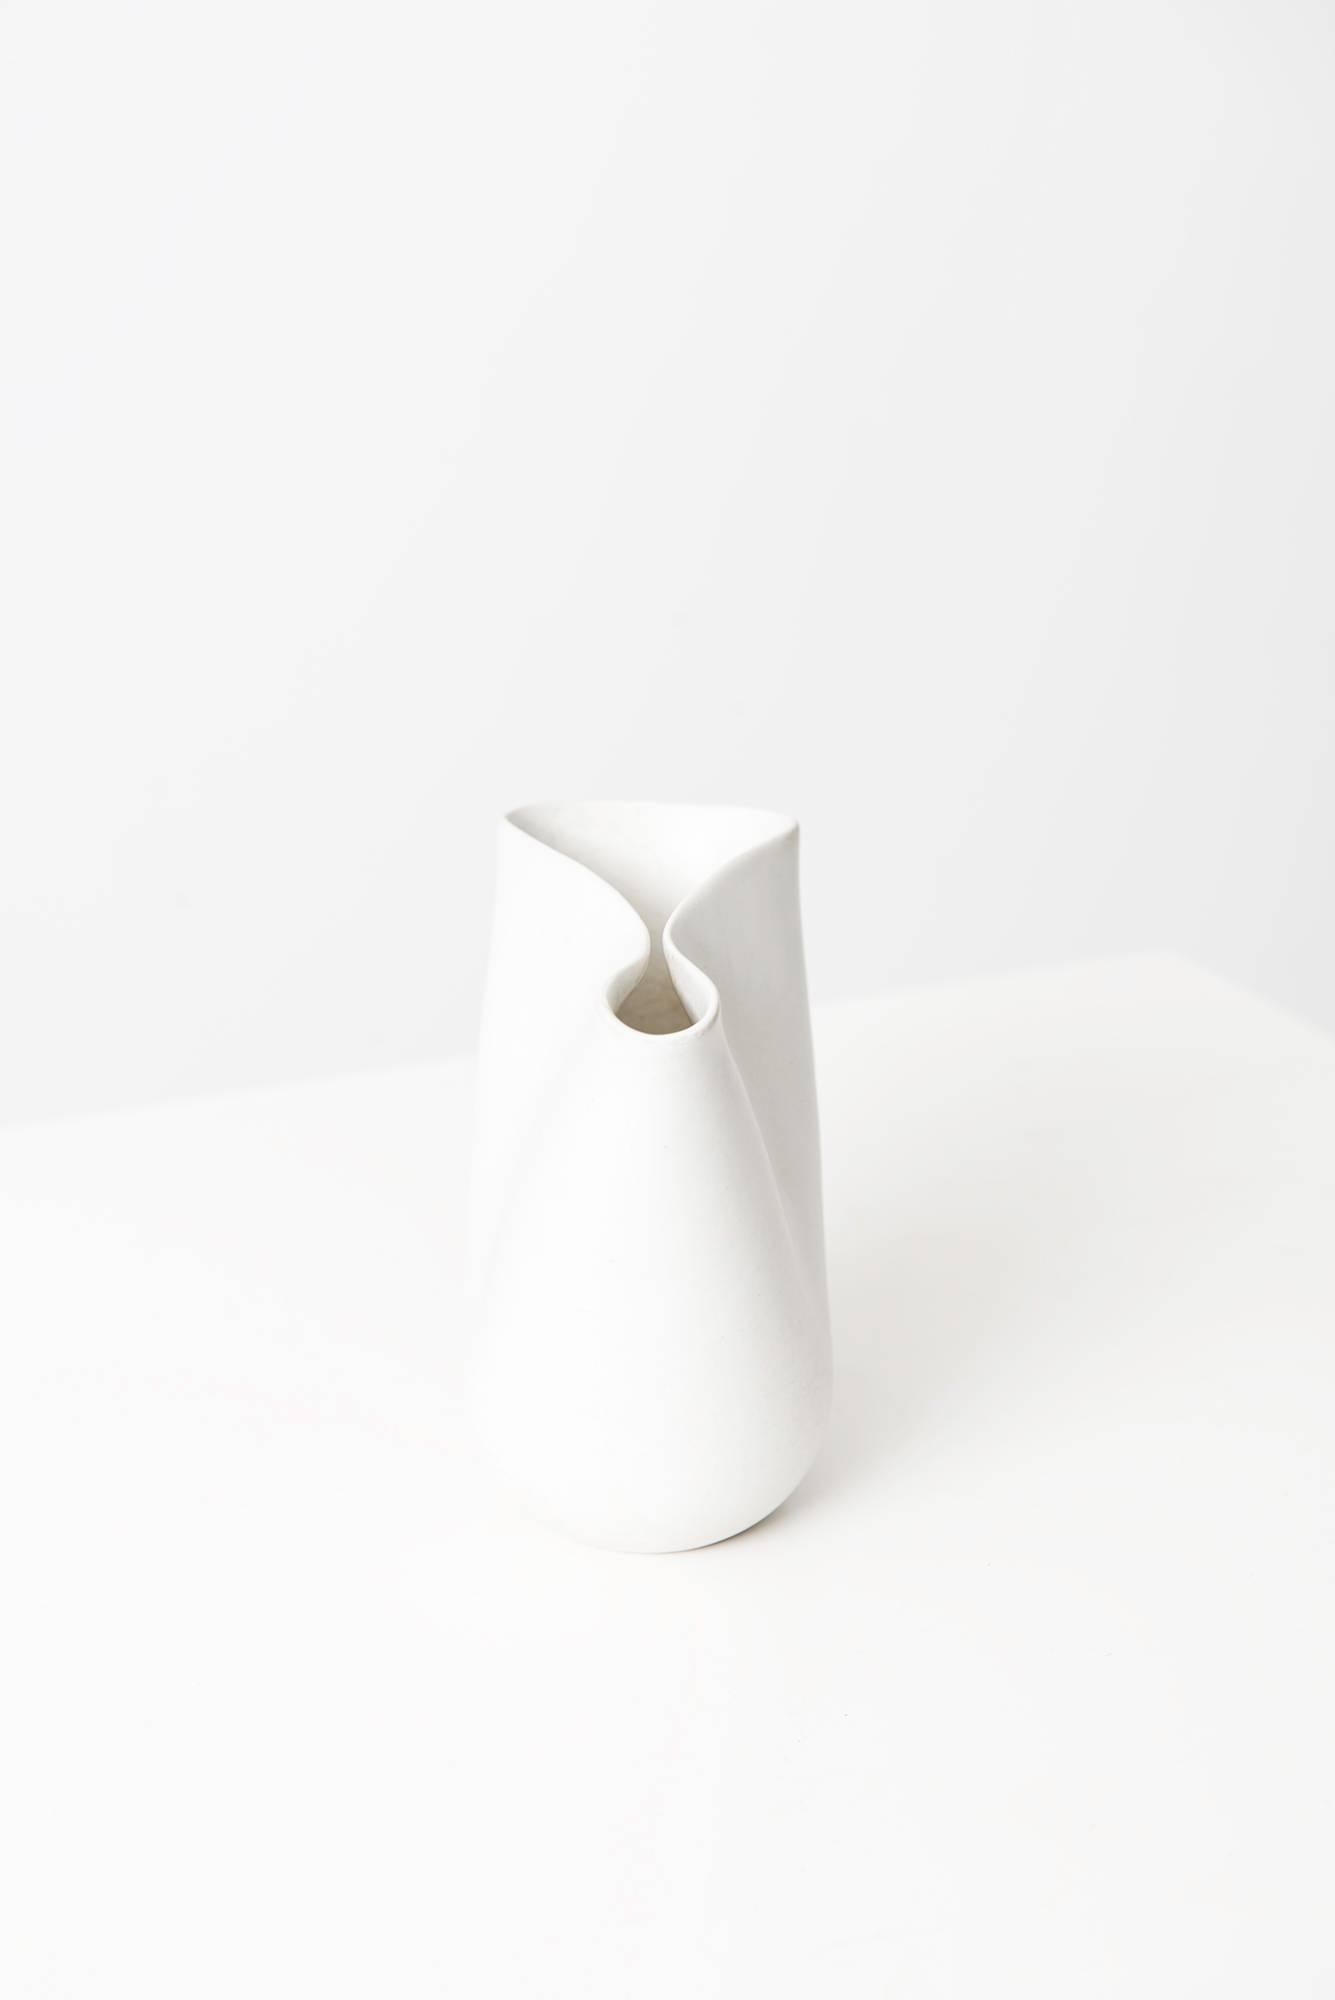 Ceramic vase model Veckla designed by Stig Lindberg. Produced by Gustavsberg in Sweden.